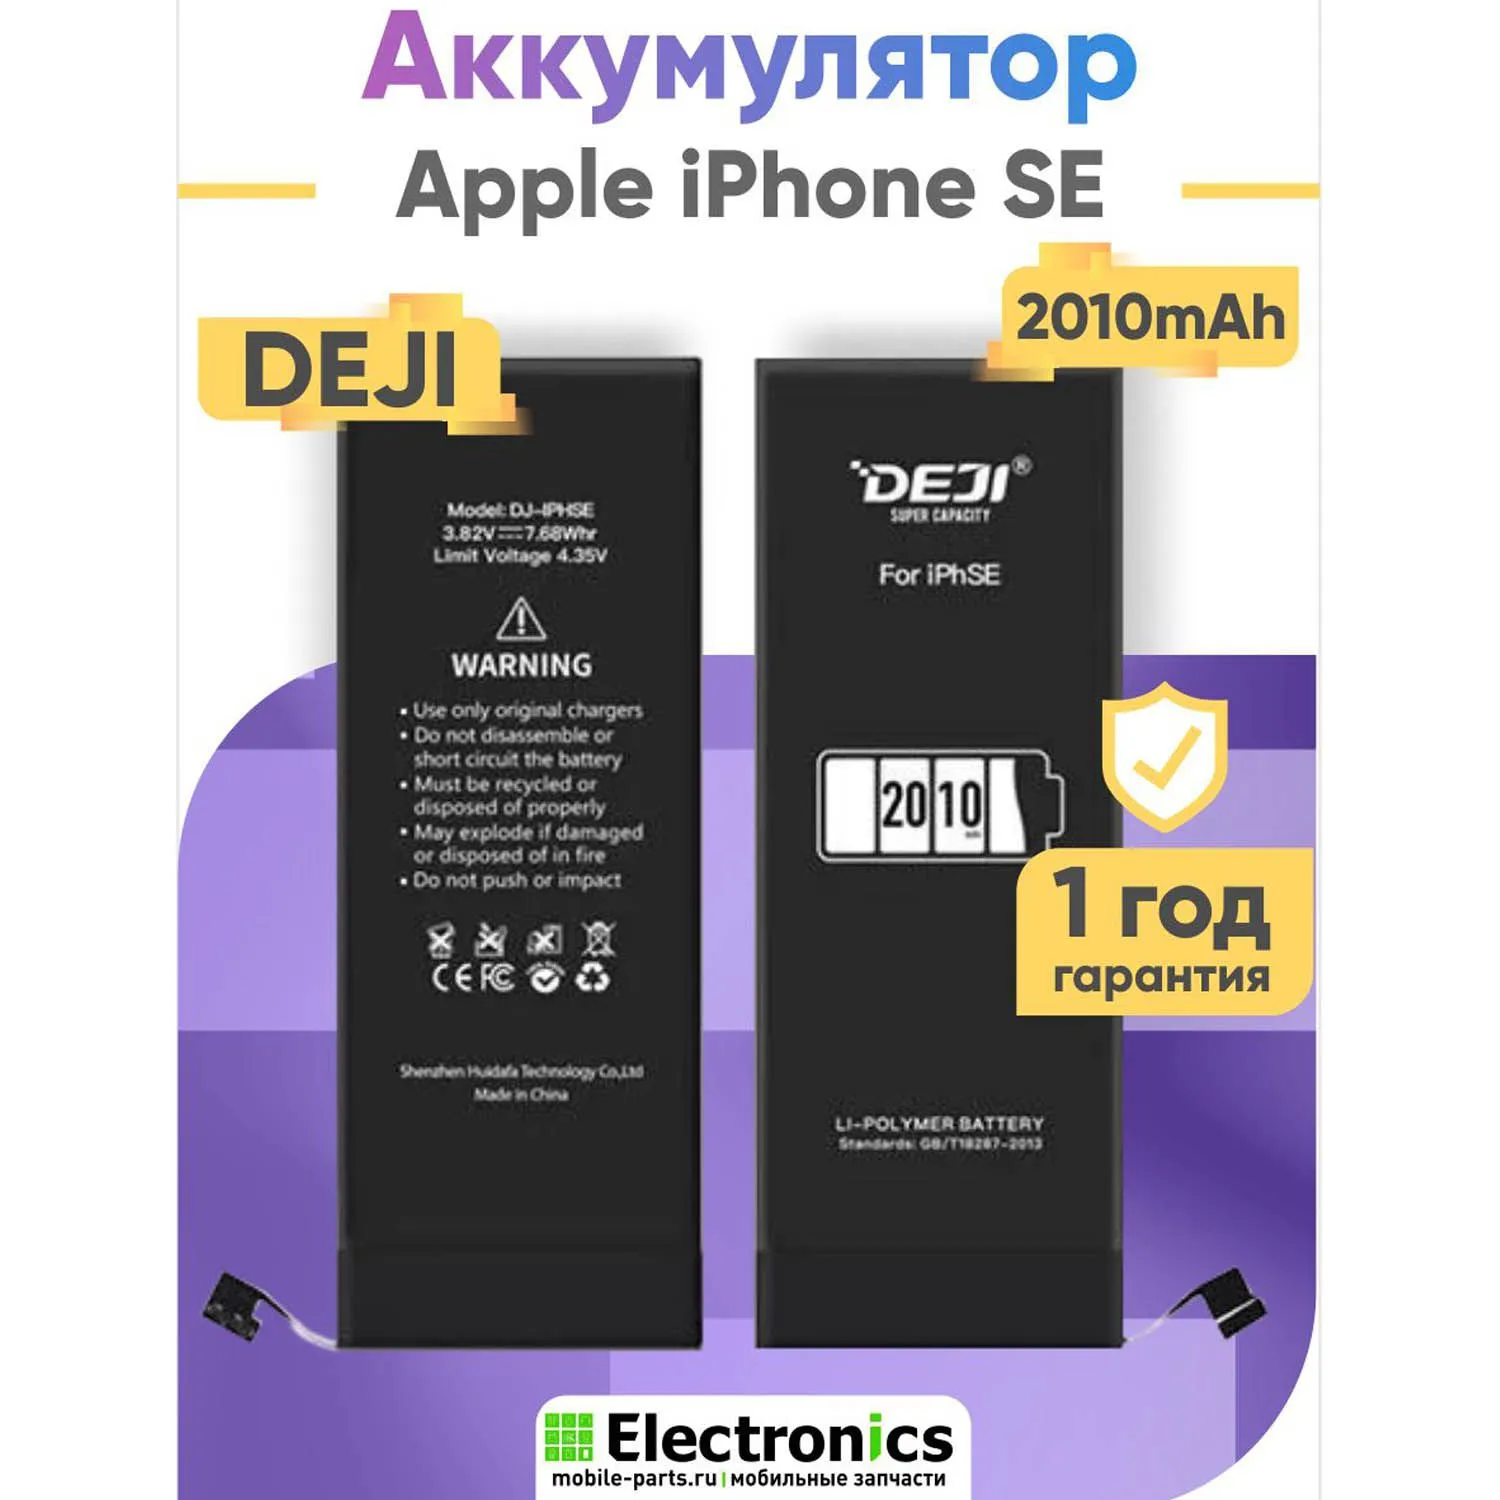 Аккумулятор DEJI Apple iPhone SE повышенной ёмкости 2010mAh